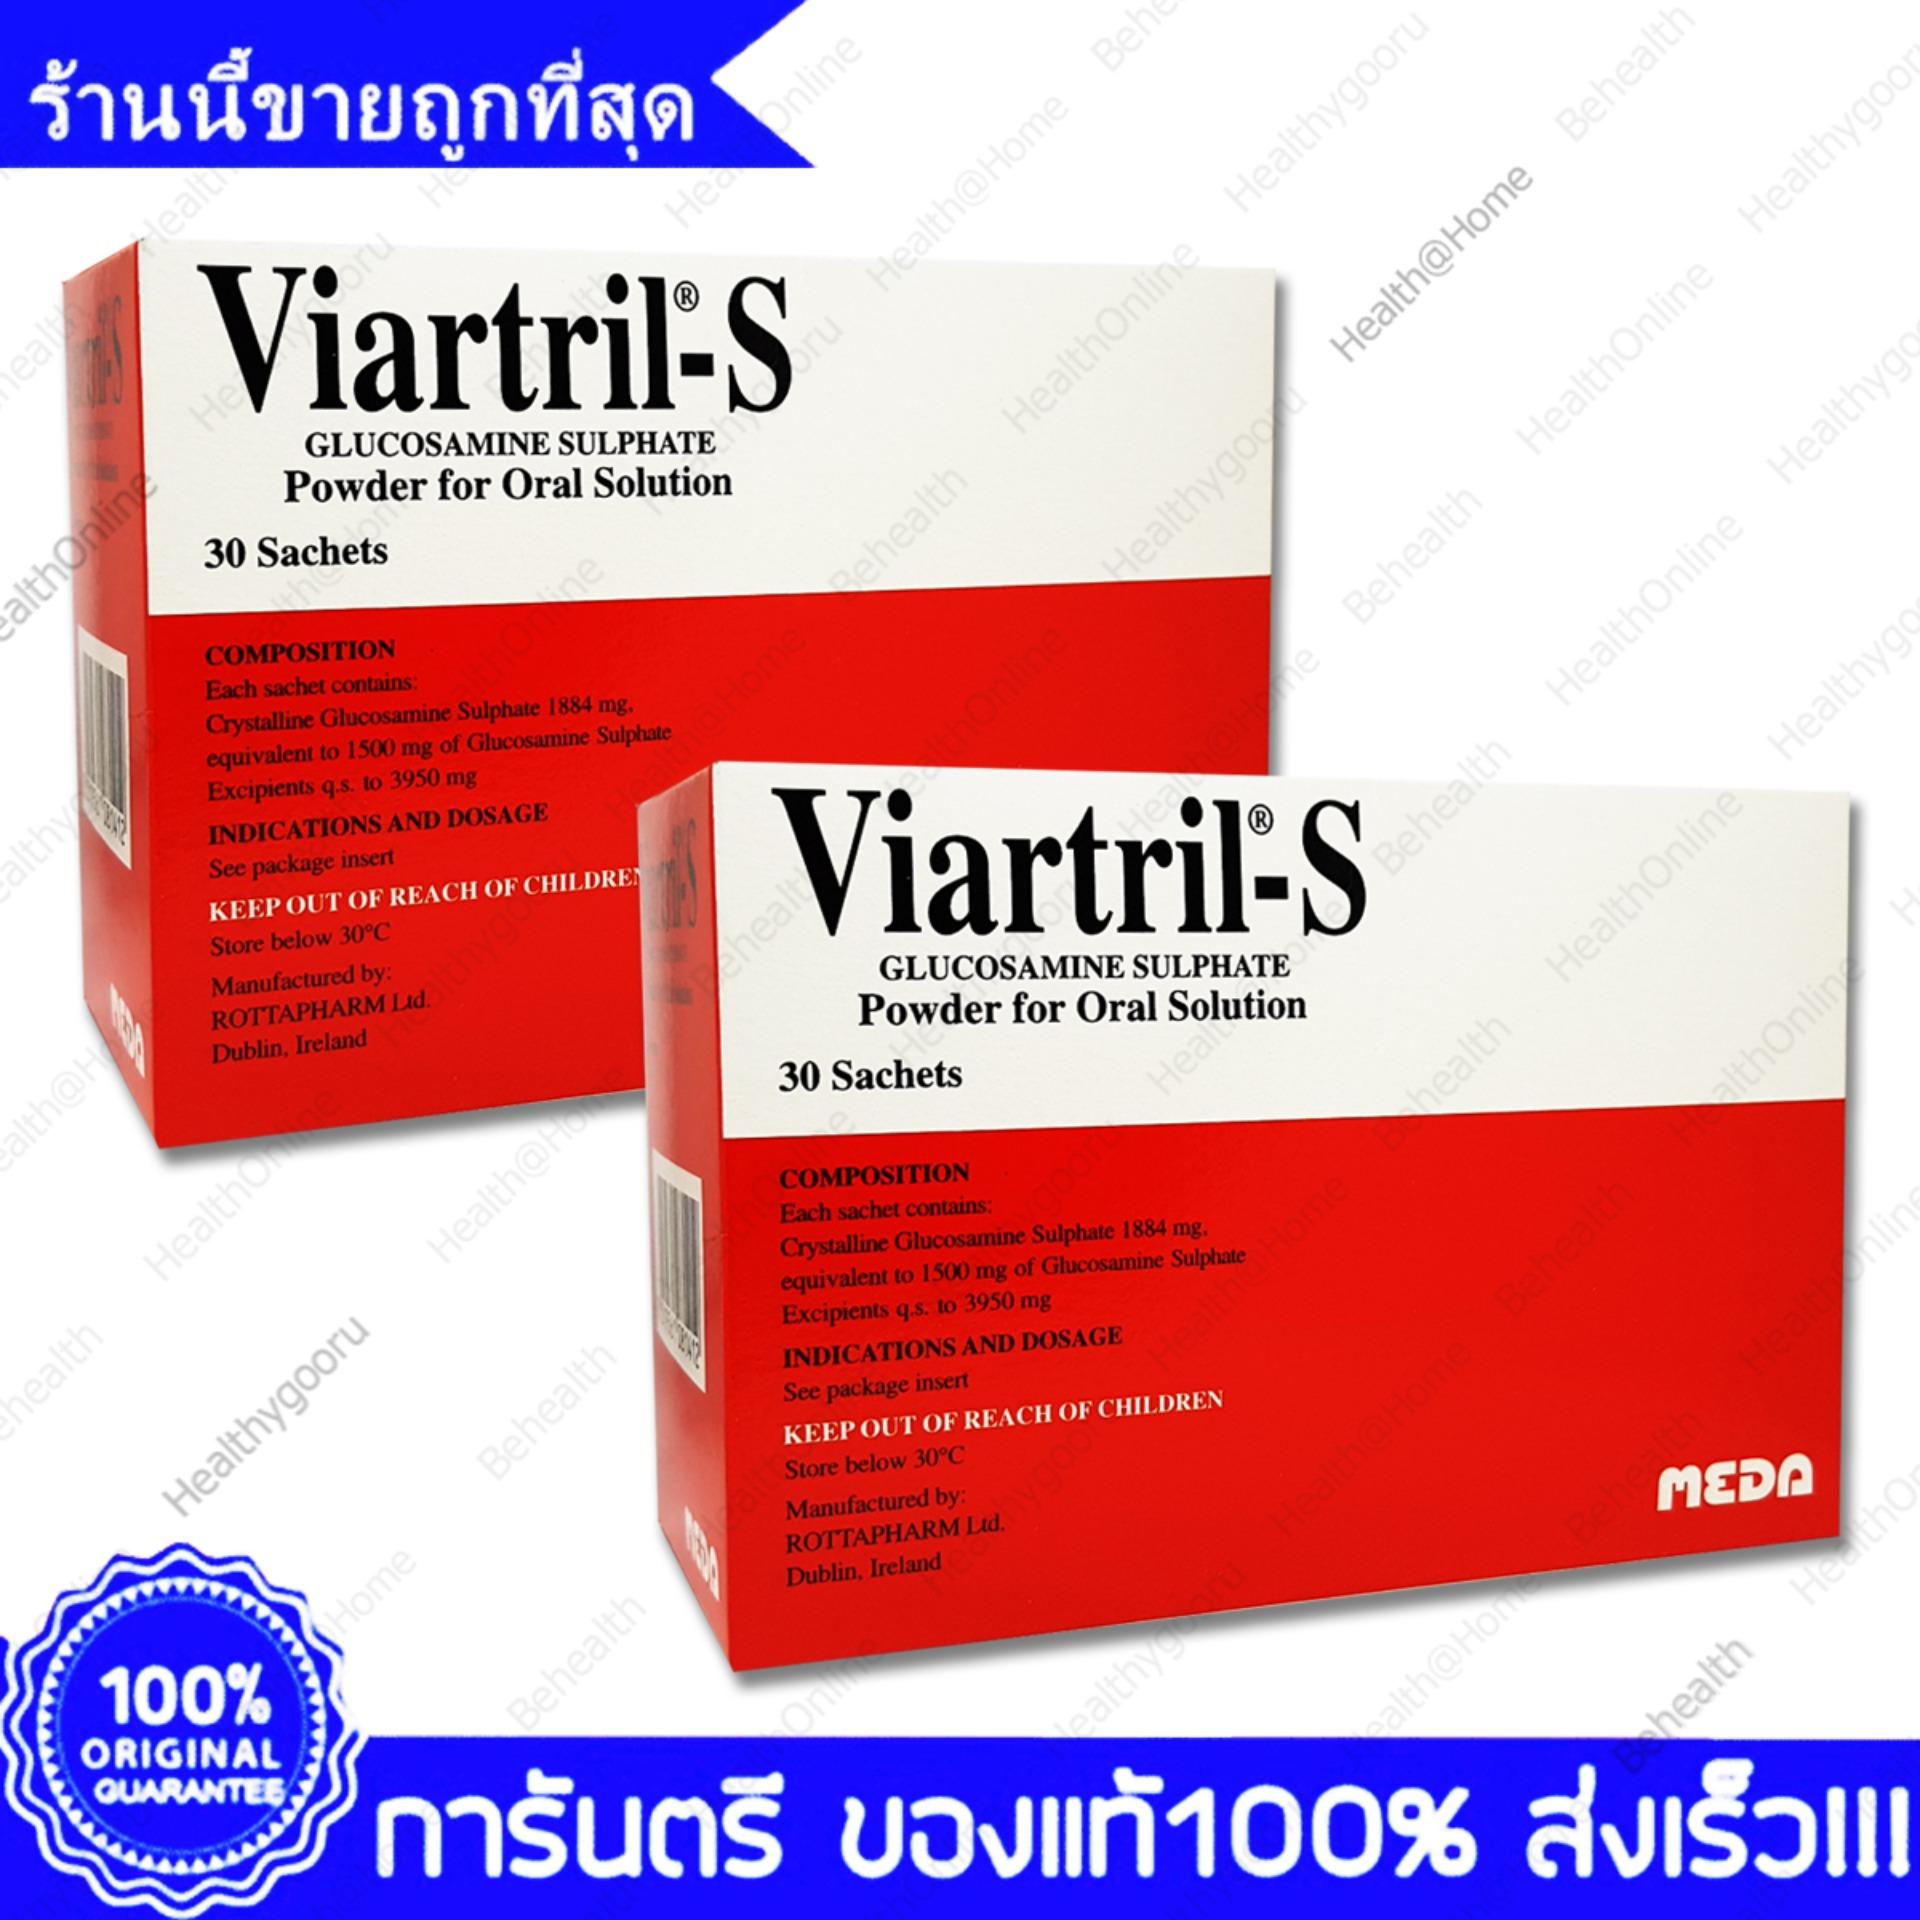 viartril s ราคา ในไทย รวมภาษี